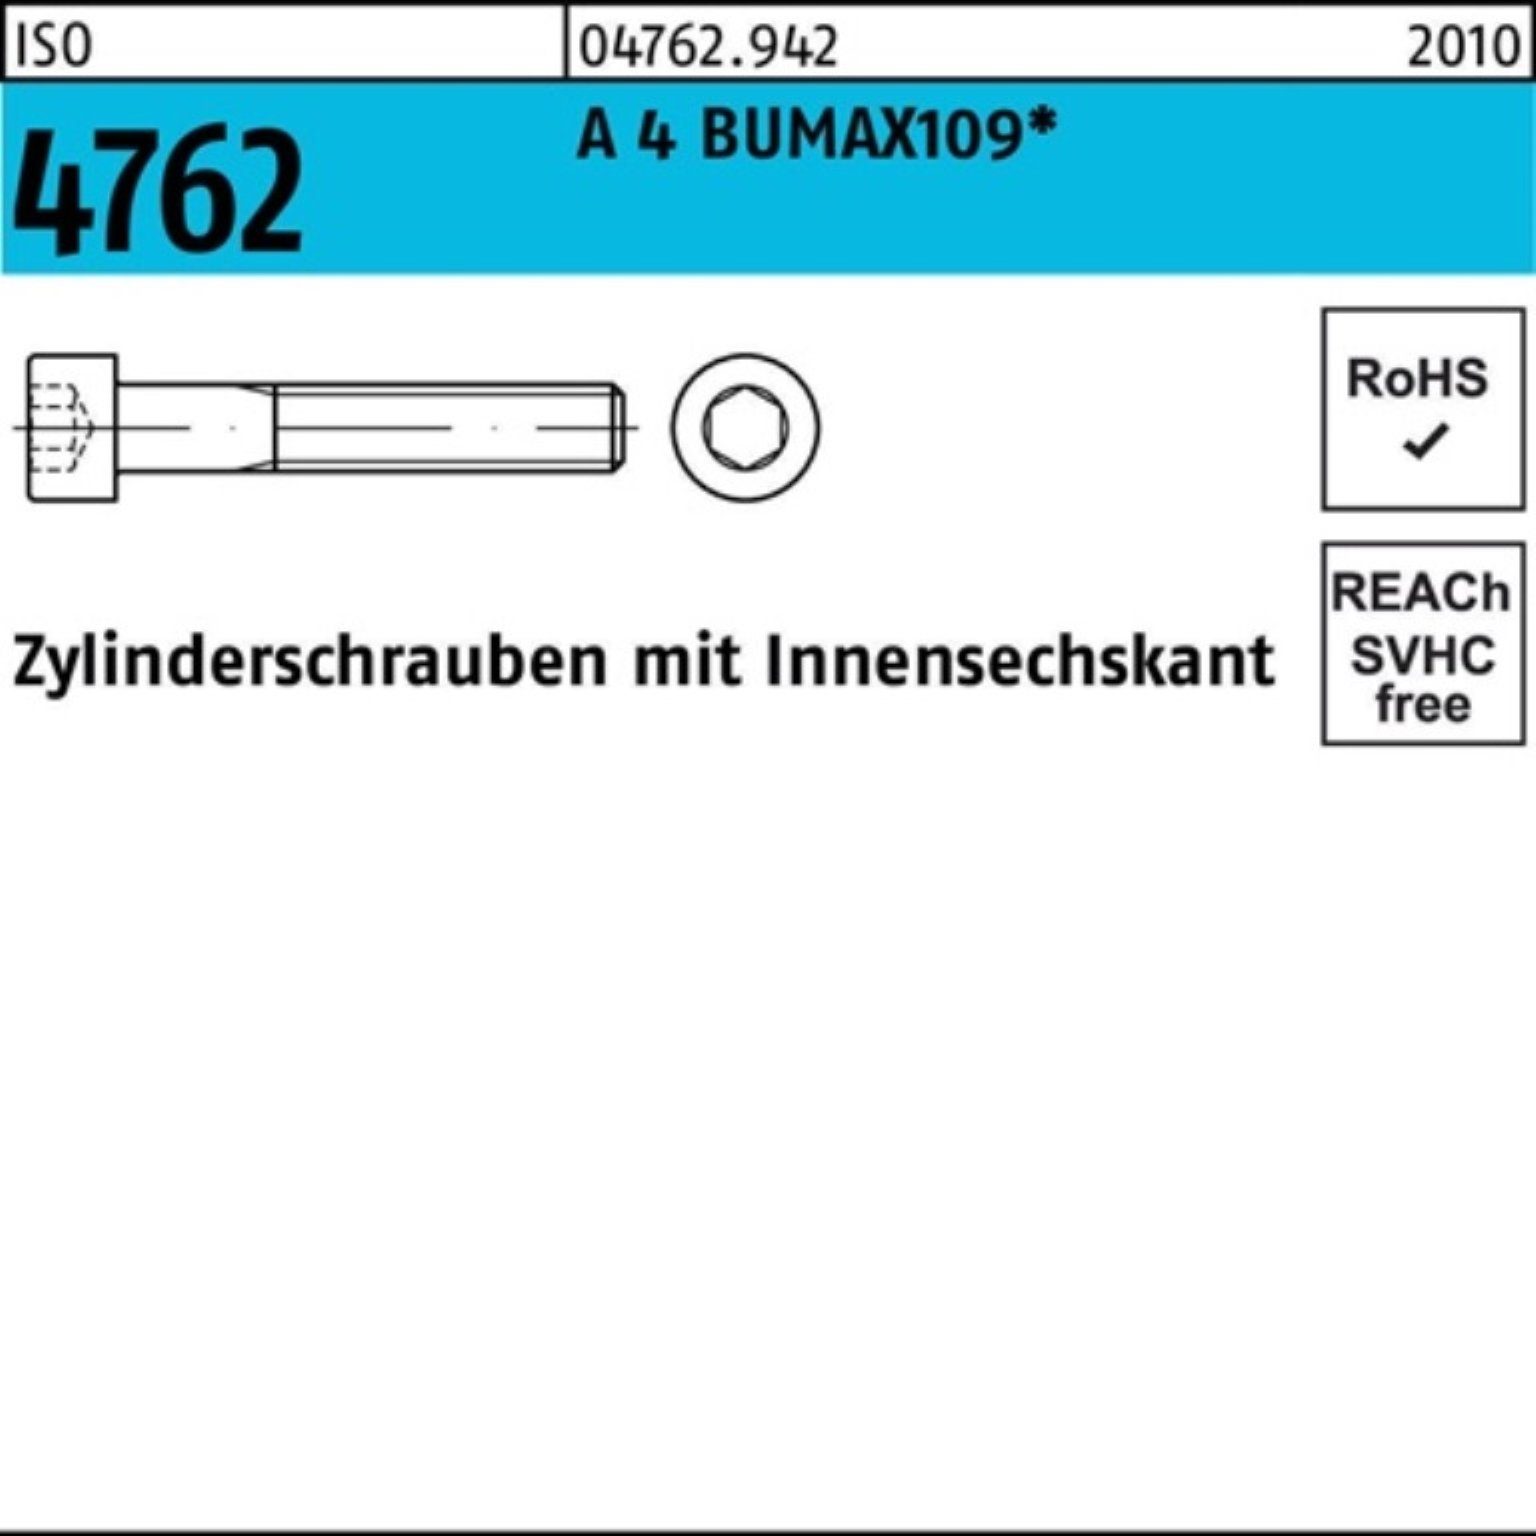 Bufab Zylinderschraube 100er Pack Innen-6kt ISO BUMAX109 40 4 50 M8x 4762 Zylinderschraube A